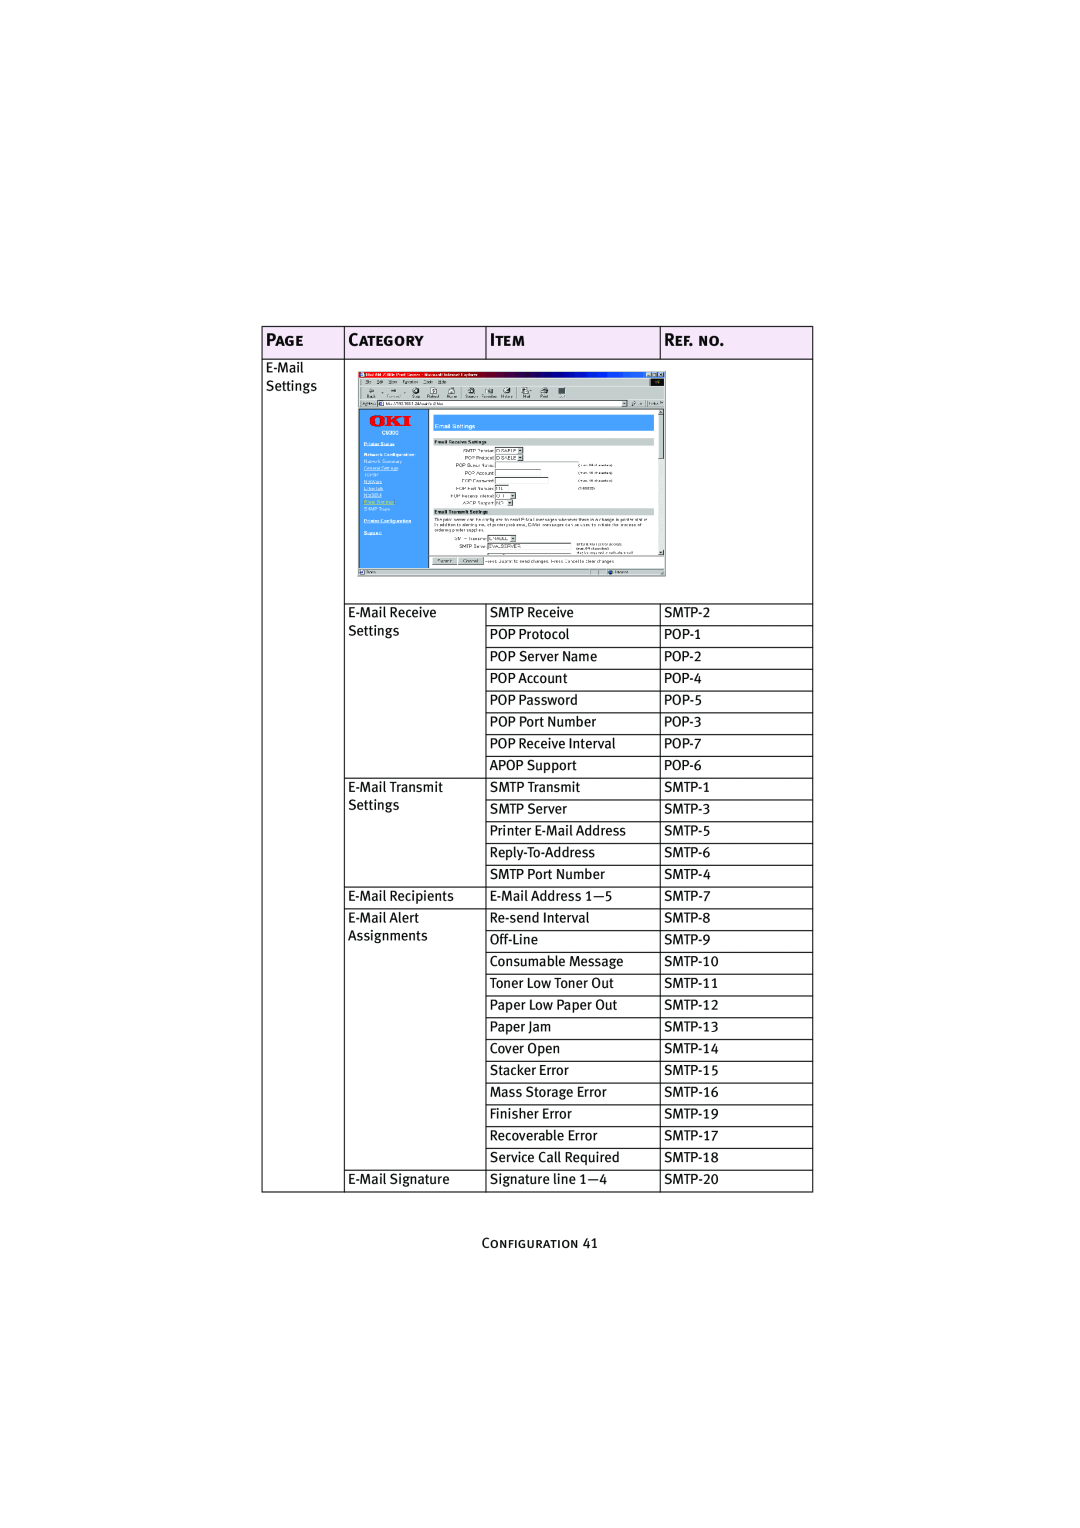 Oki 7300e manual Page, Category, Ref. no, E-Mail Settings 